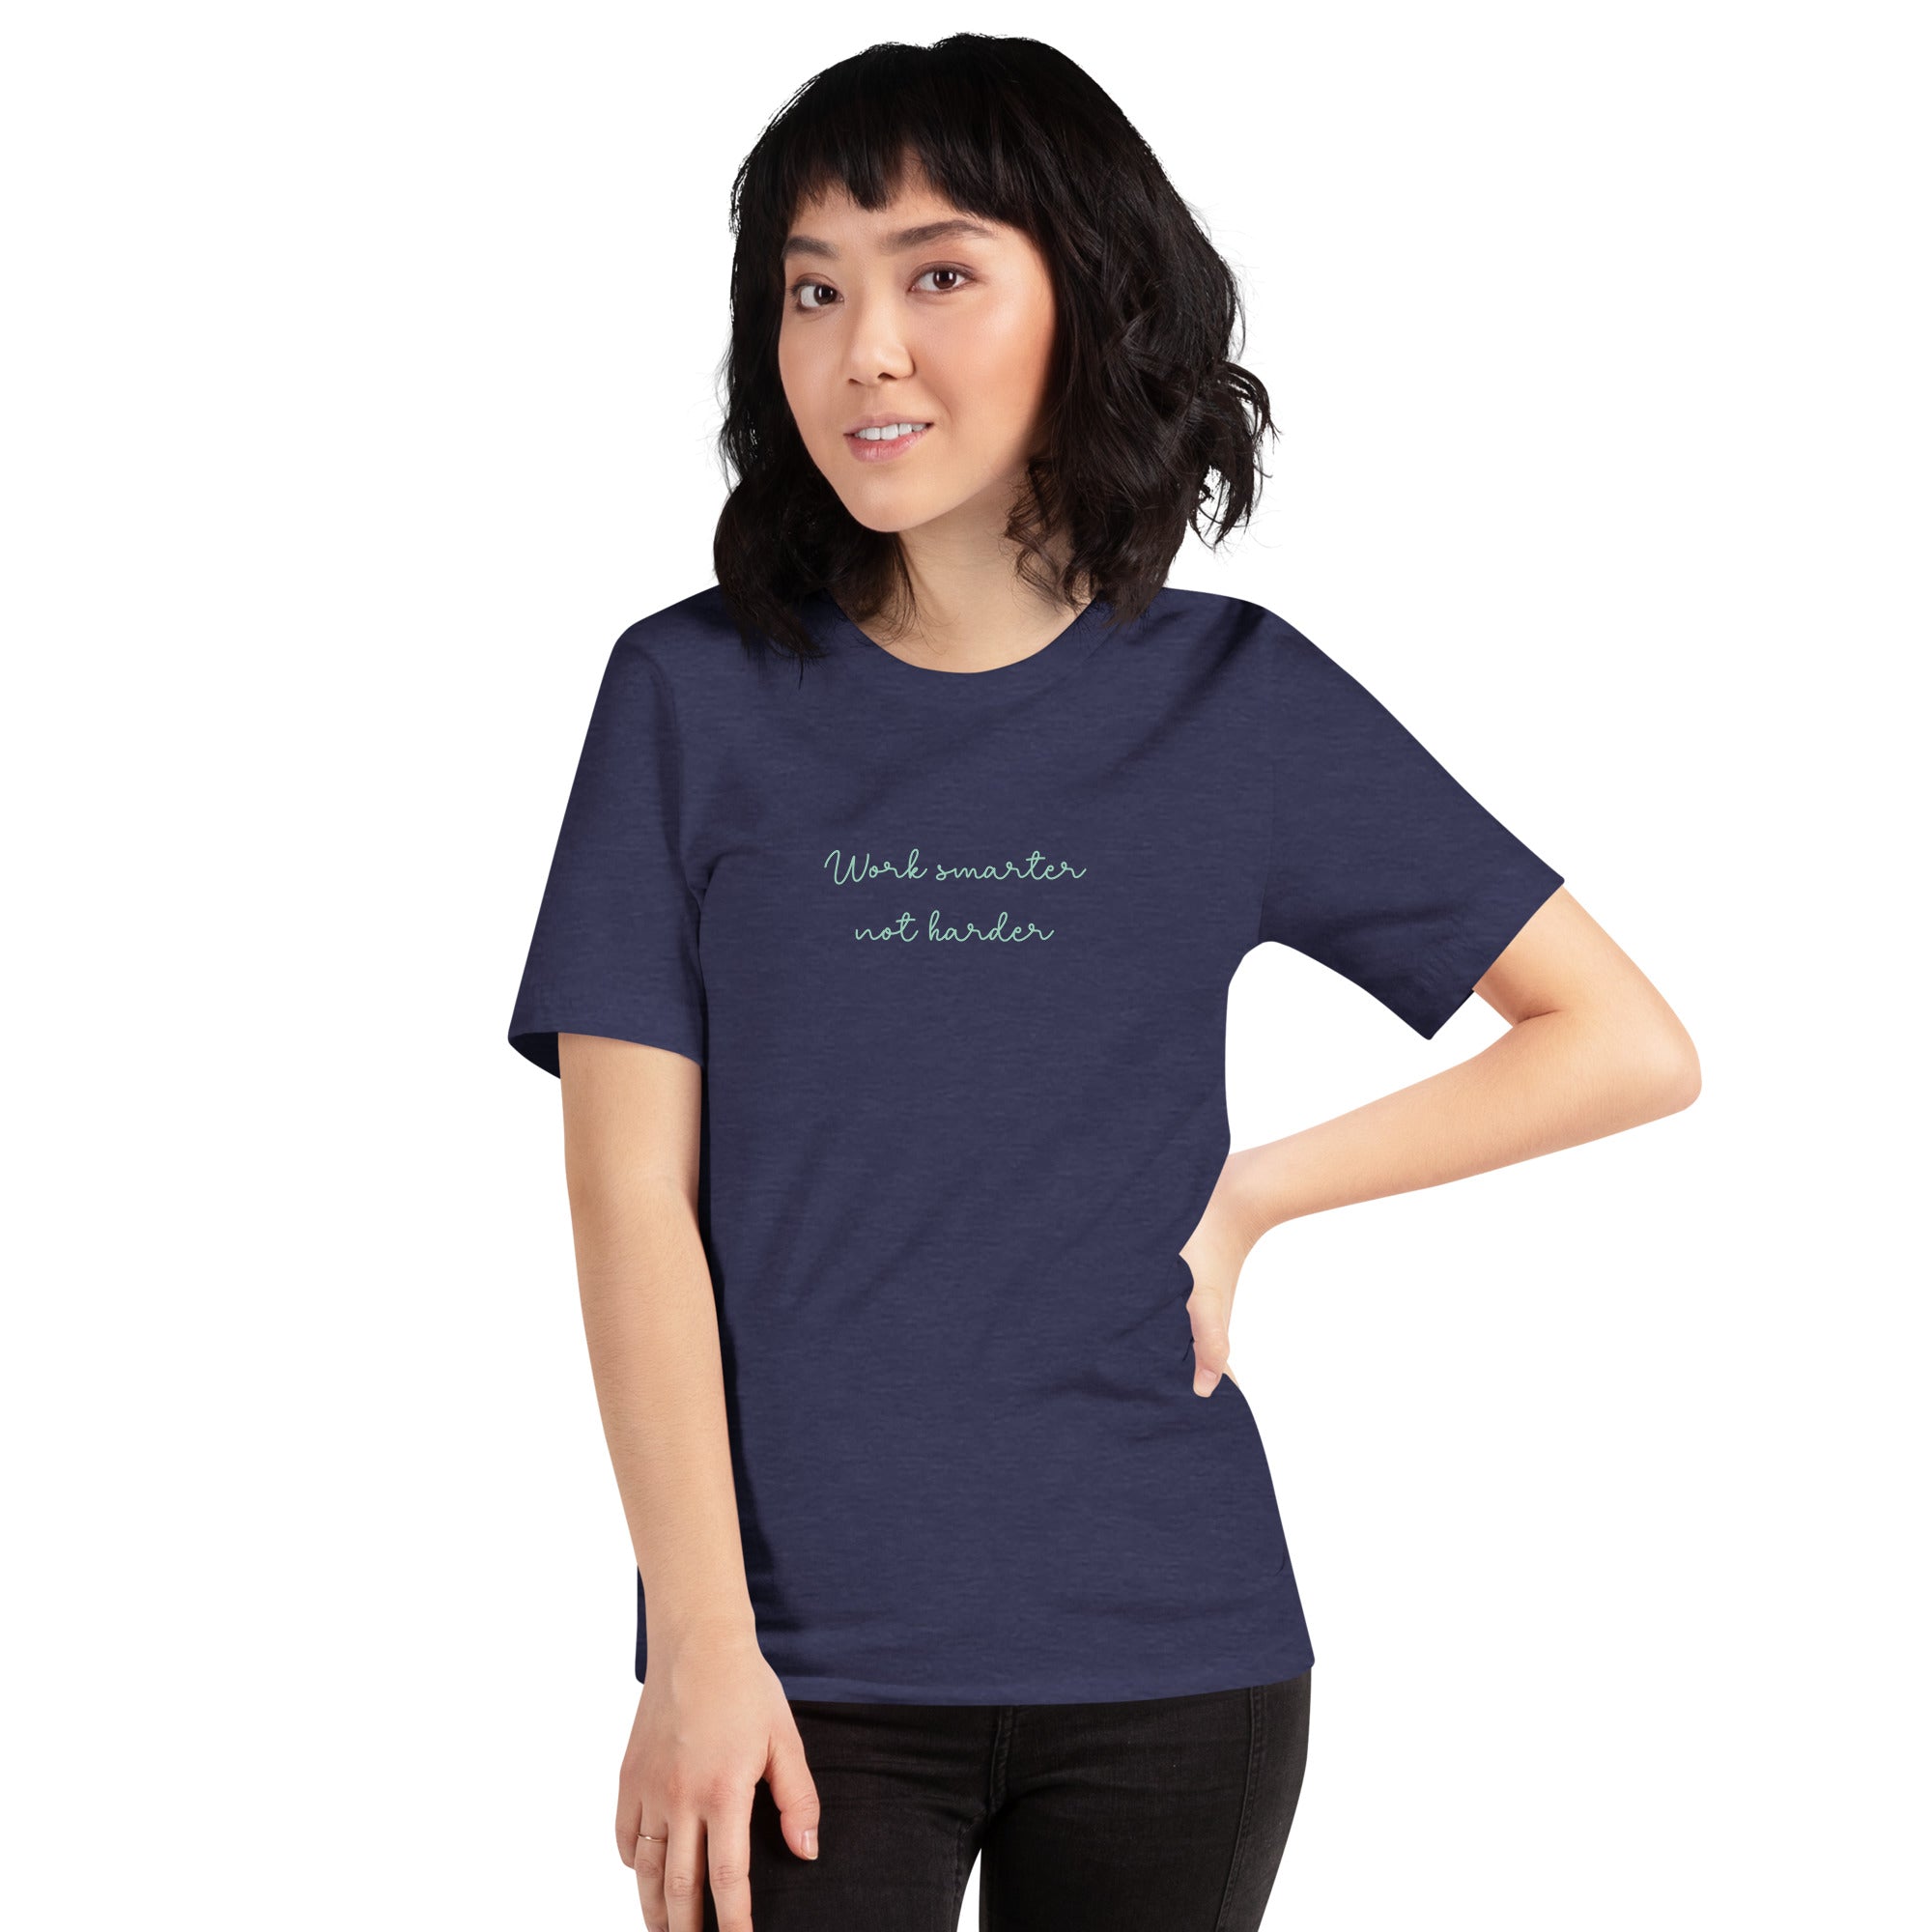 Work Smarter Not Harder, Premium Short-Sleeve Unisex T-Shirt | Positive Affirmation Tee